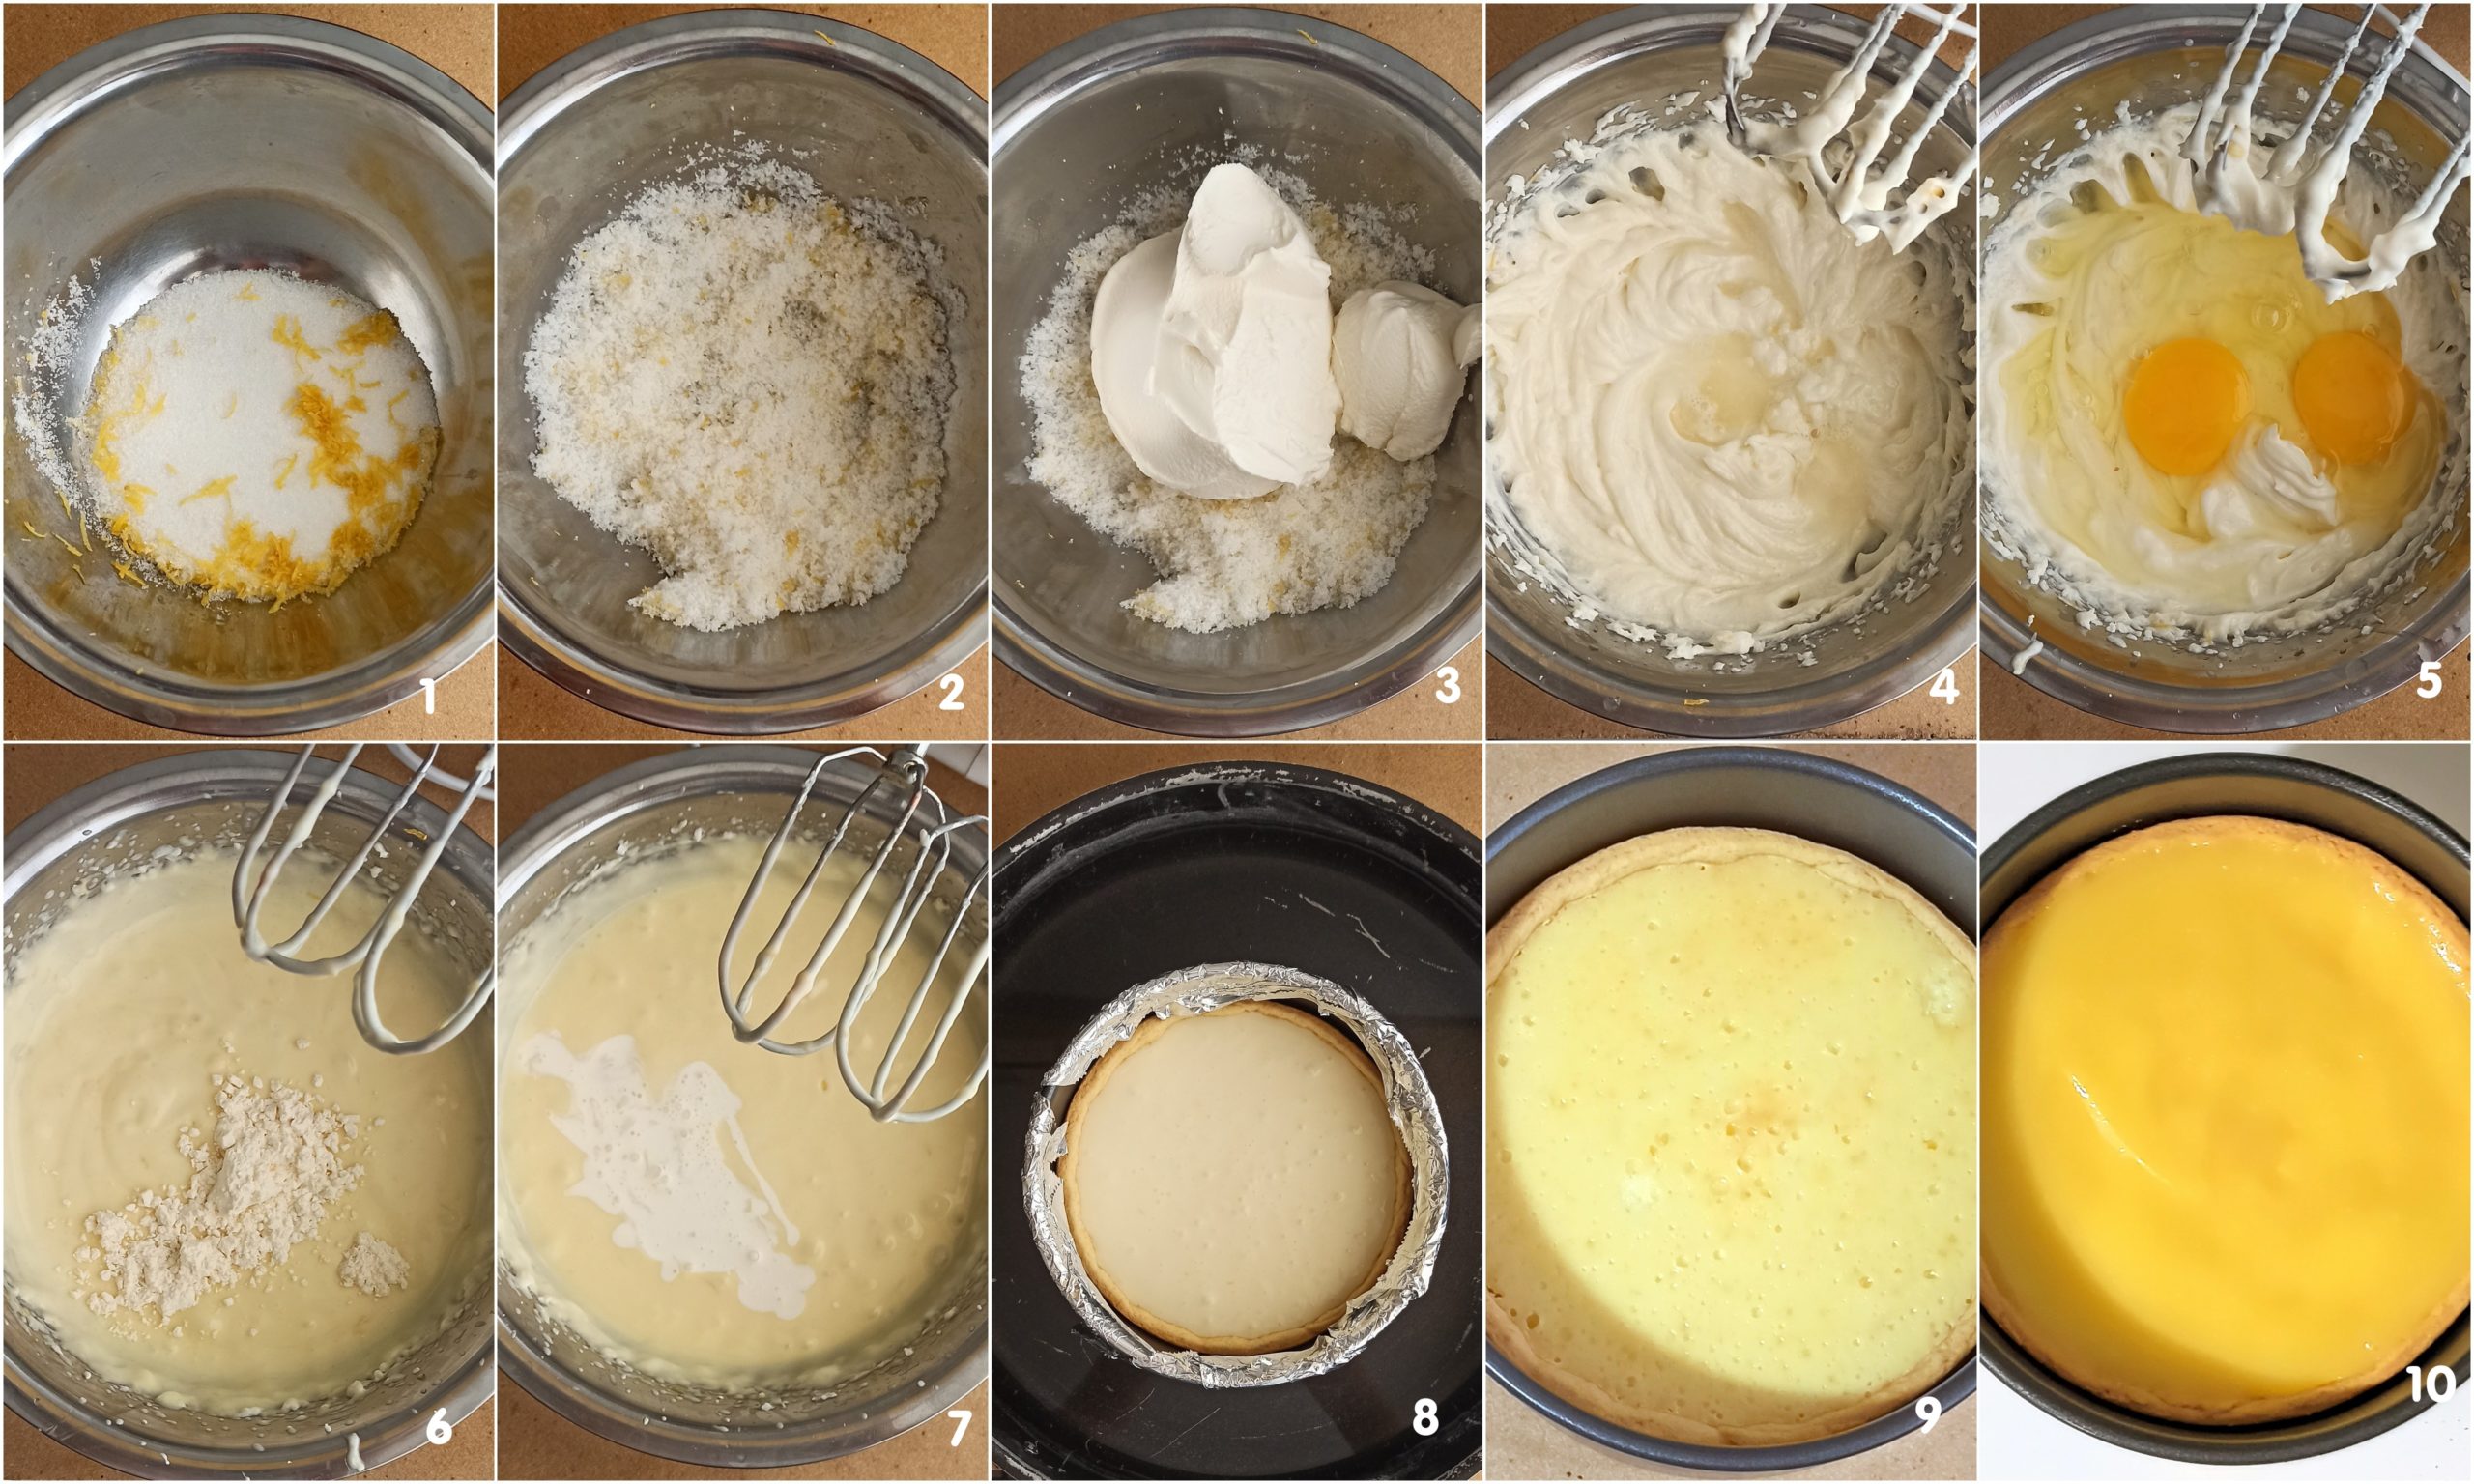 Cheesecake al limone senza glutine - La Cassata Celiaca